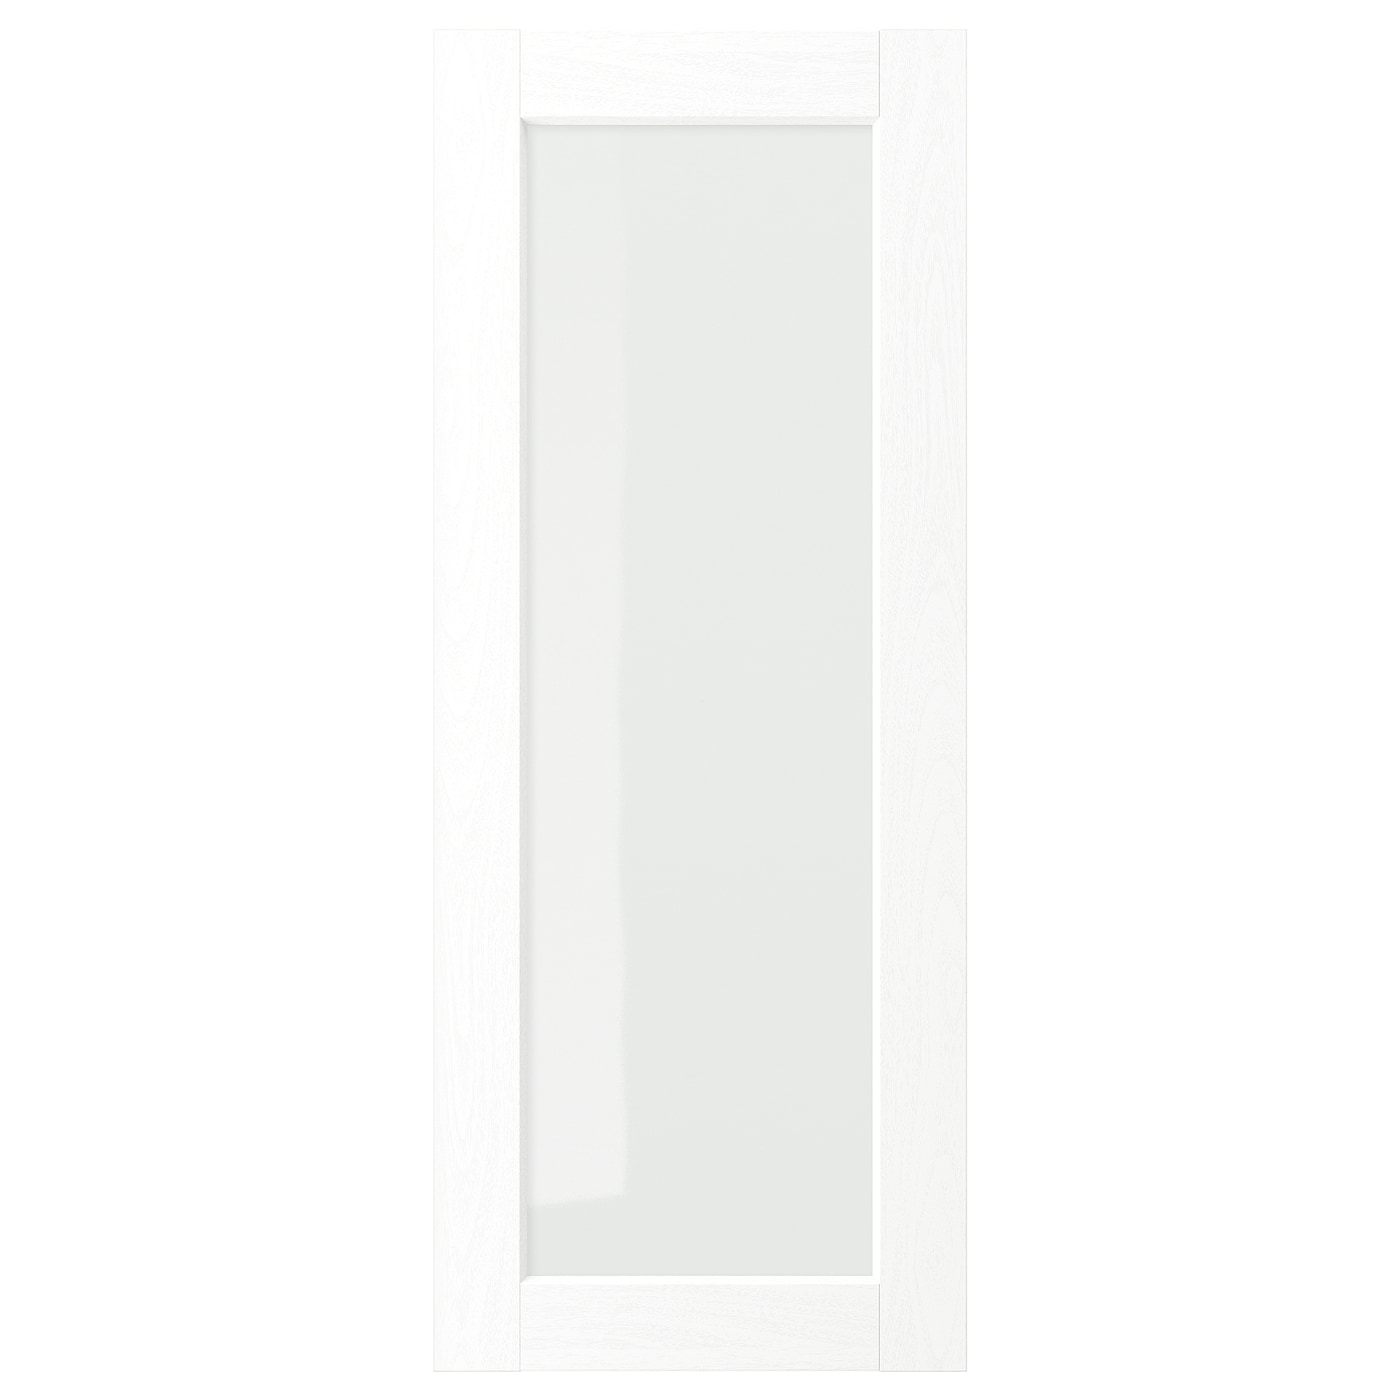 Дверца со стеклом - ENKÖPING/ENKOPING, 100х40 см, белый, ЭНКОПИНГ/ЭНКЁПИНГ ИКЕА